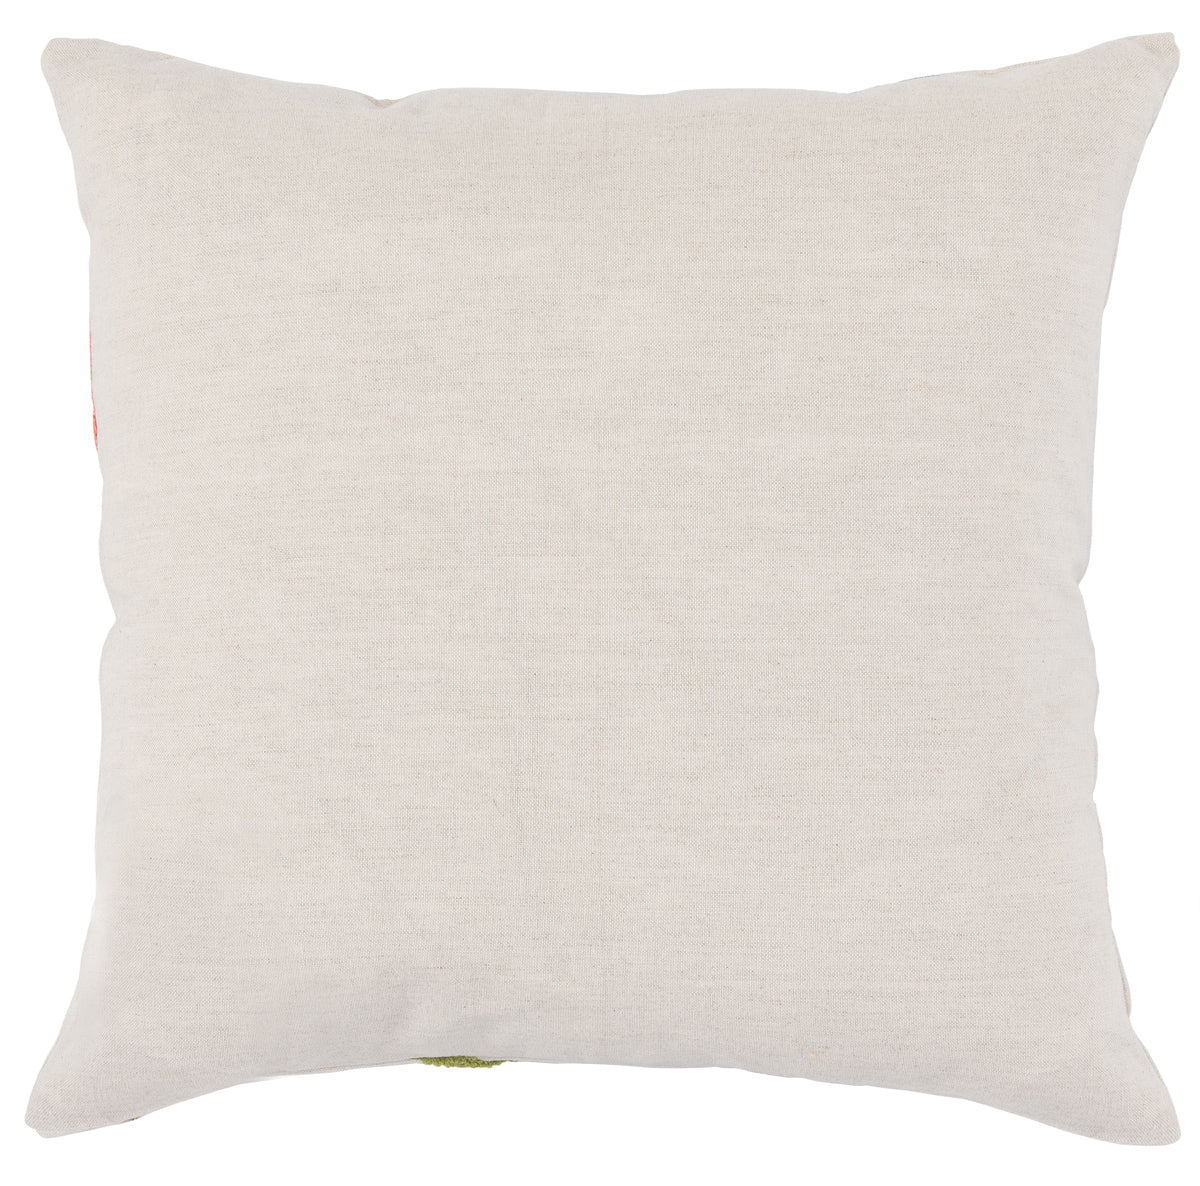 CC Lynn Multi 18x18 Accent Pillow